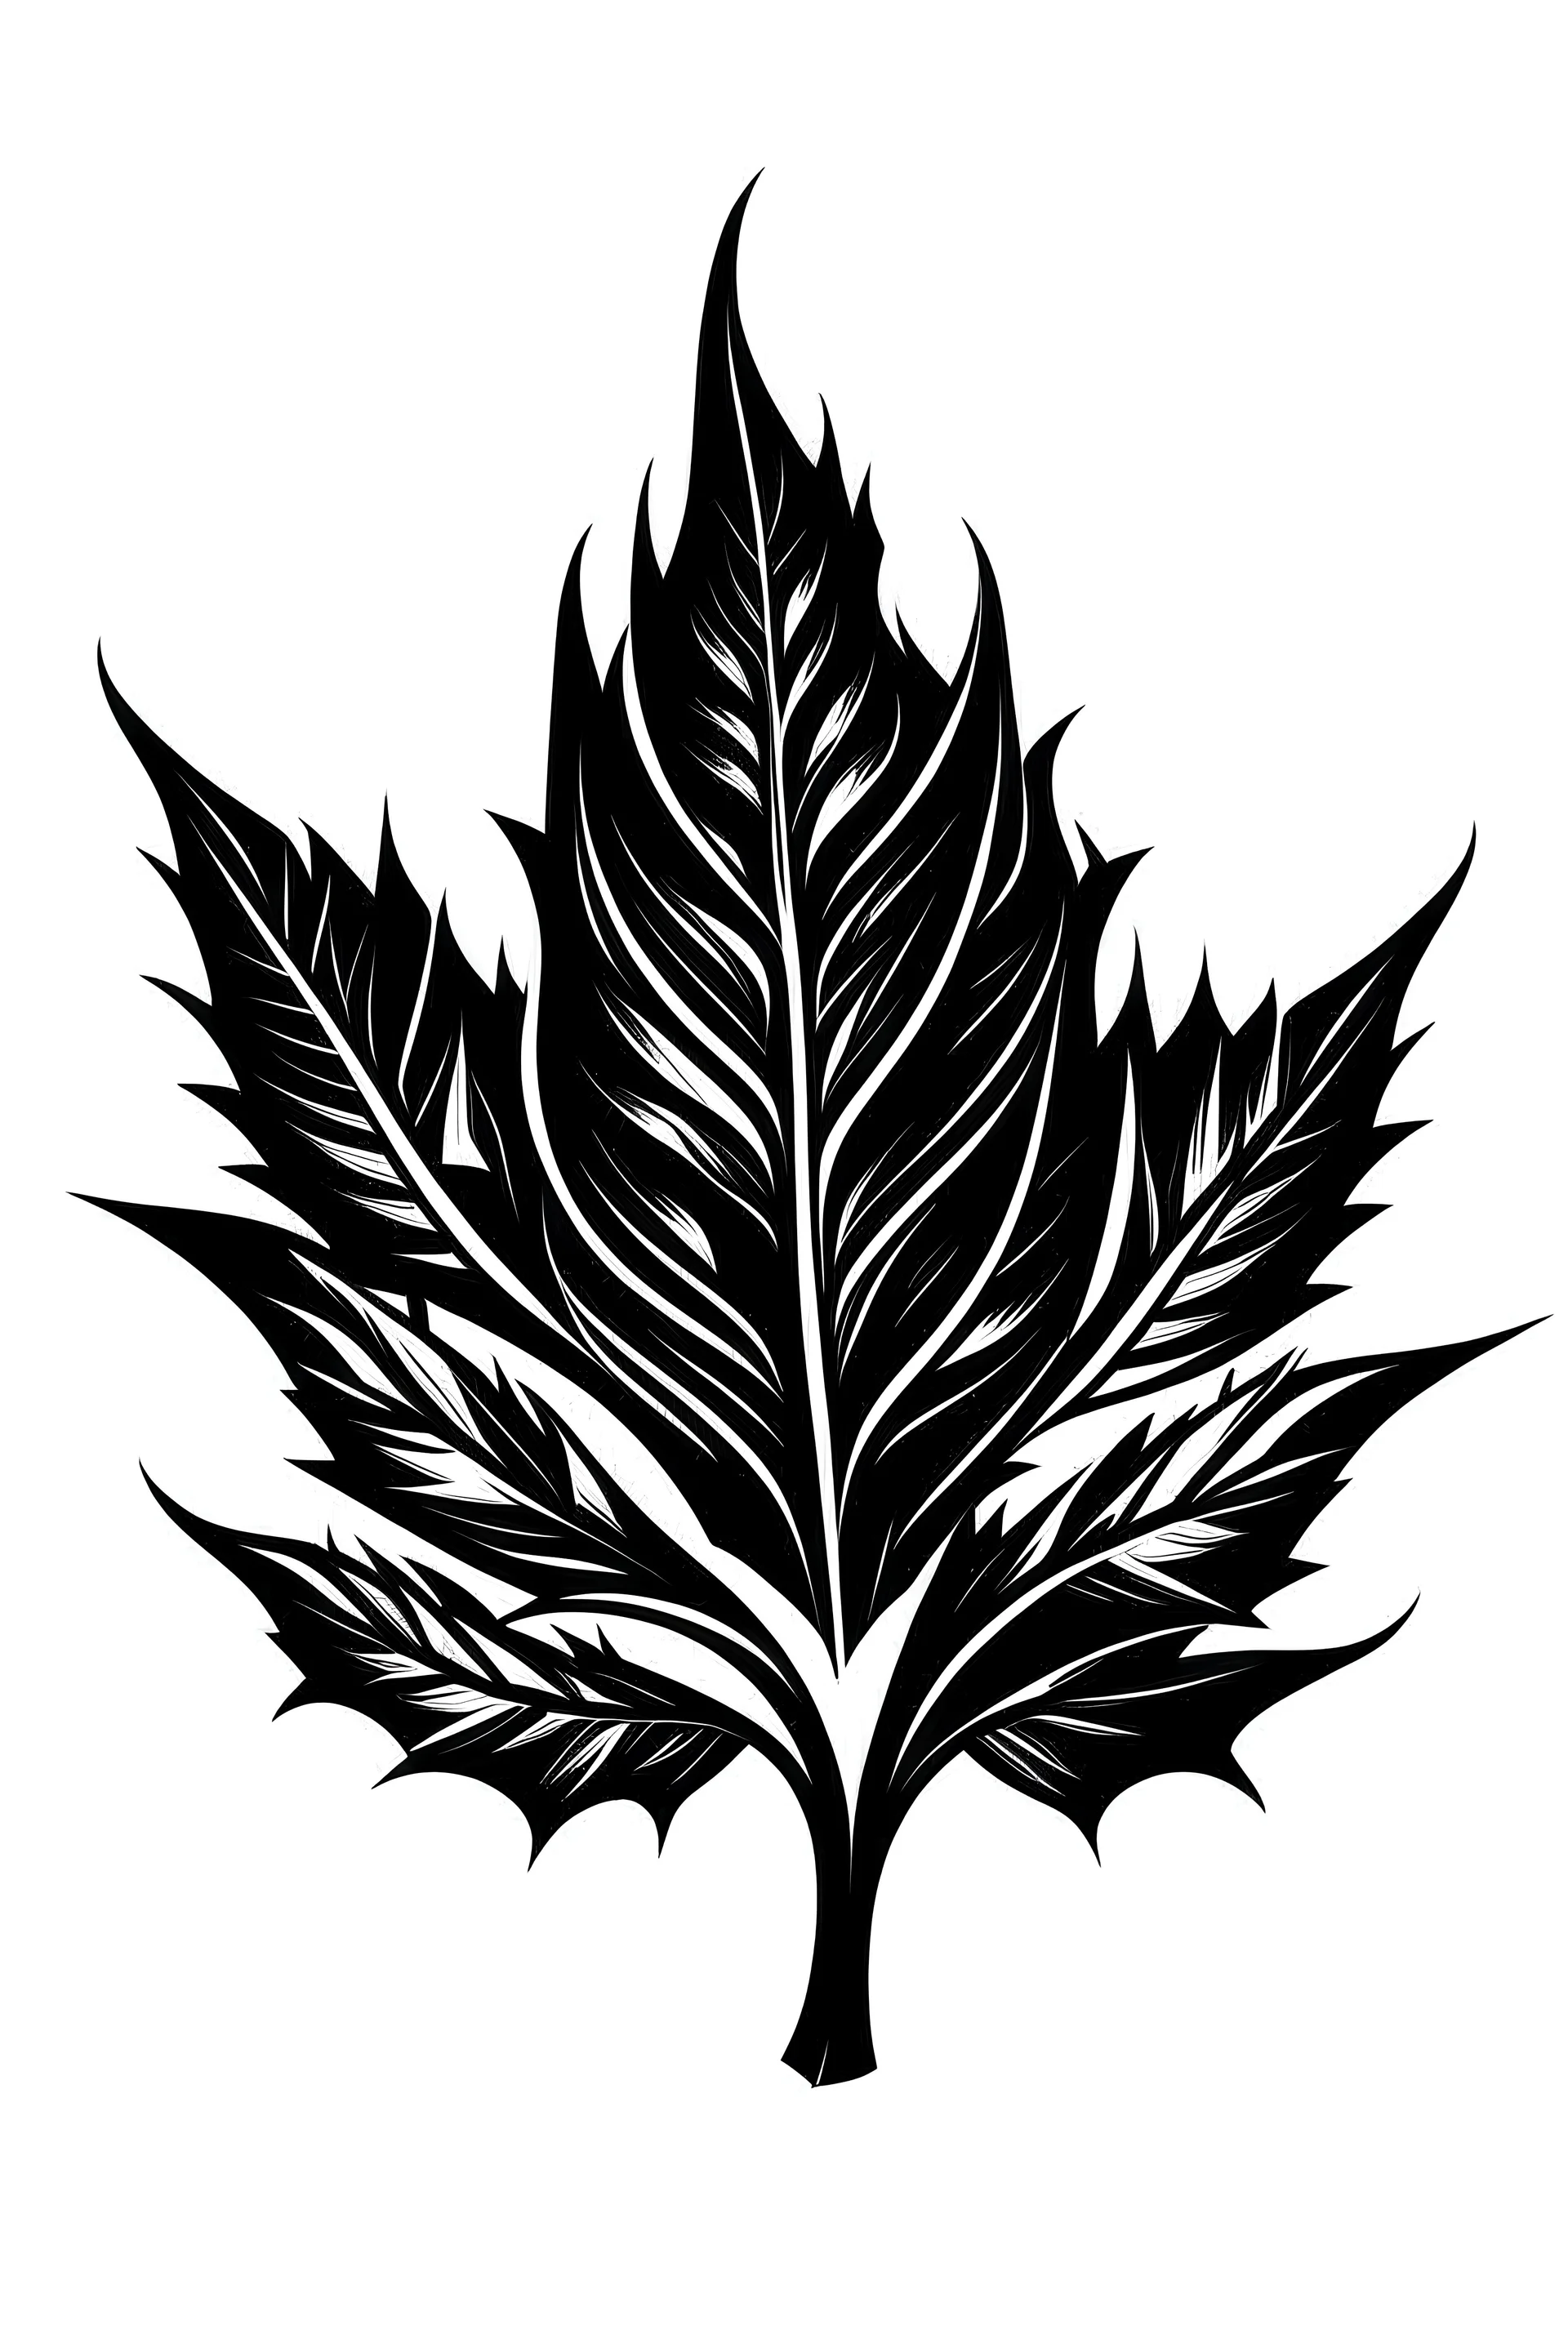 black tobacco leaf logo with thorns on white background